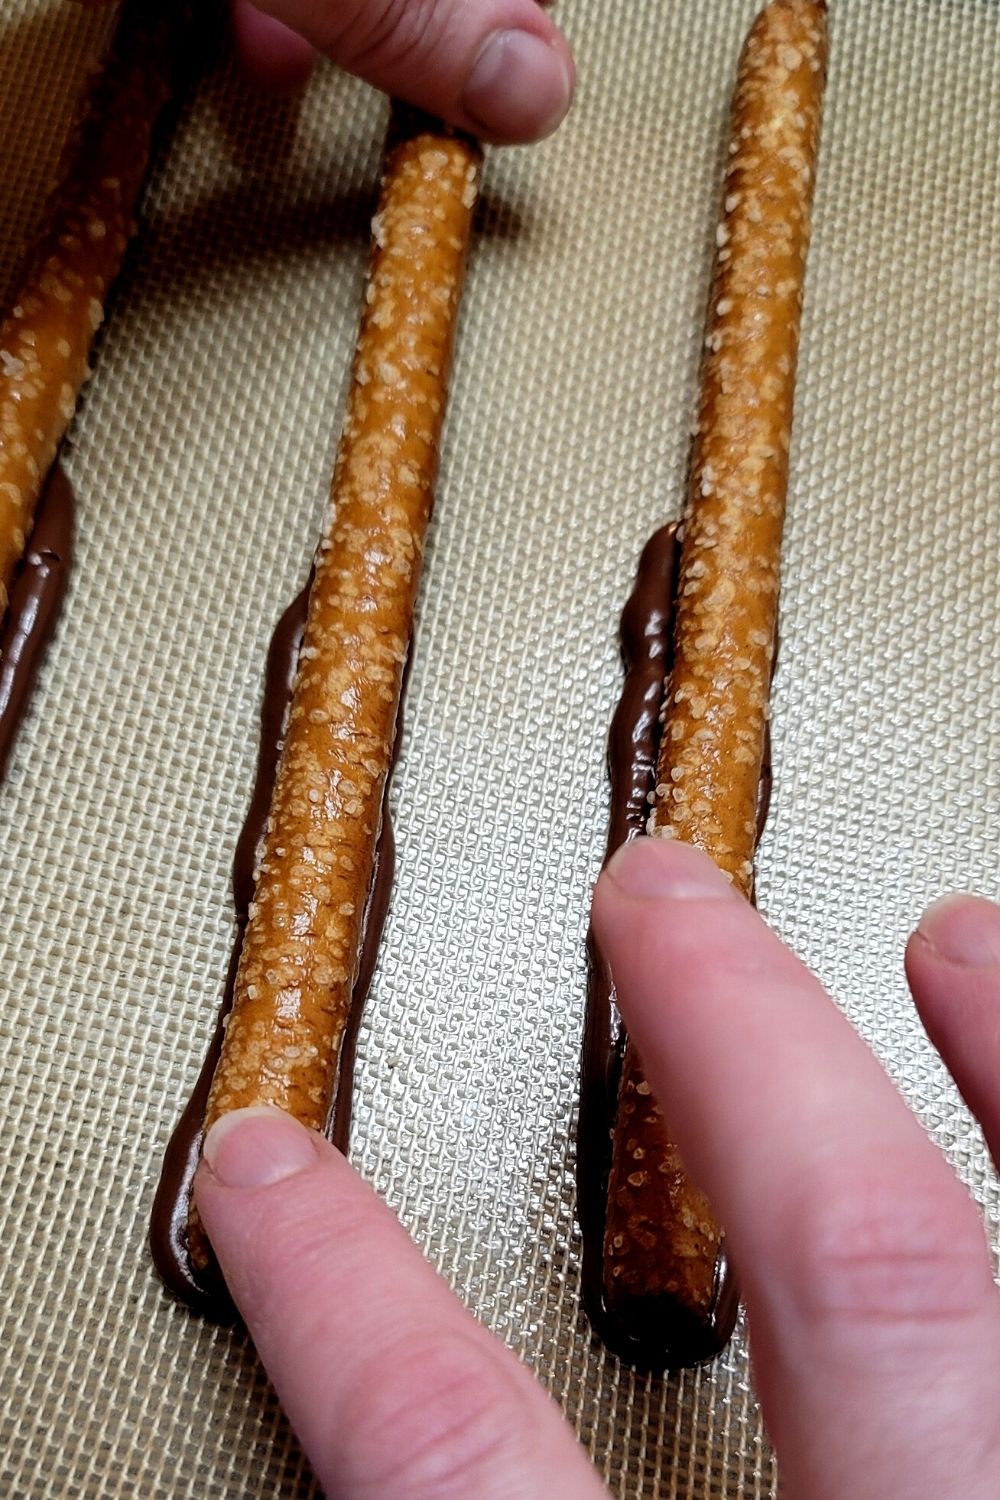 press pretzel into piped chocolate on silicone sheet for caramel chocolate pretzel logs